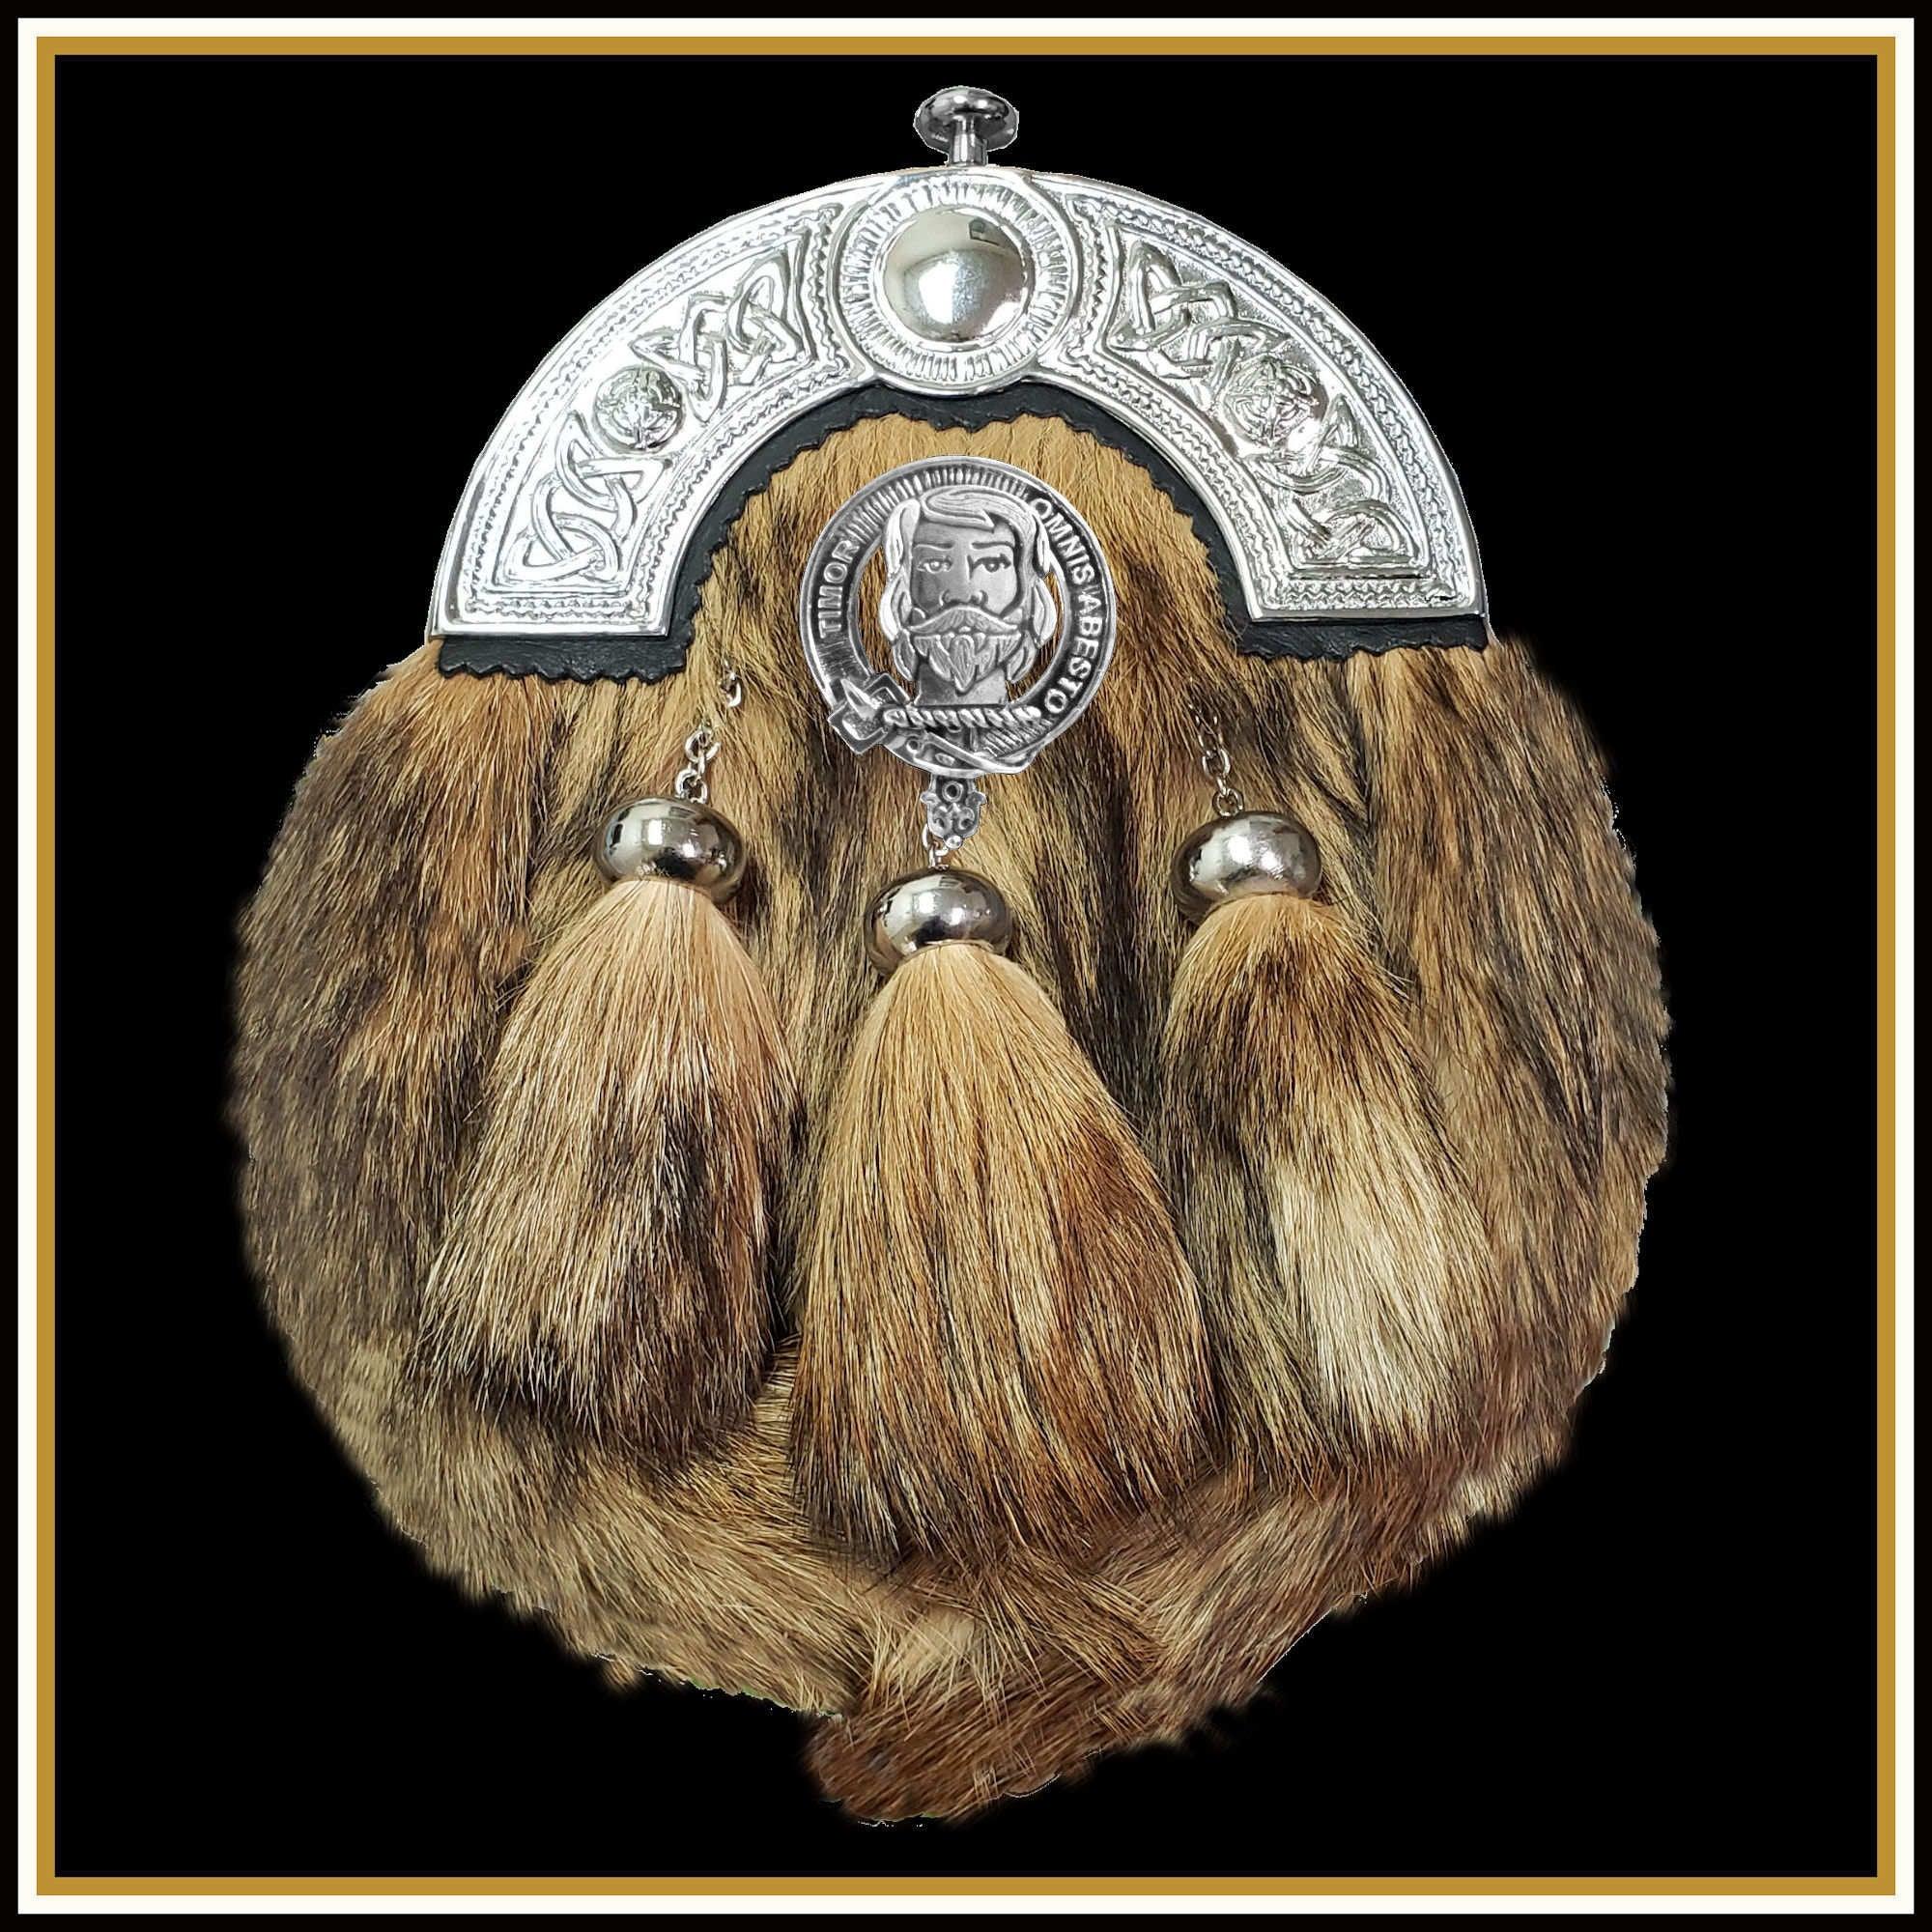 MacNab Scottish Clan Crest Badge Dress Fur Sporran